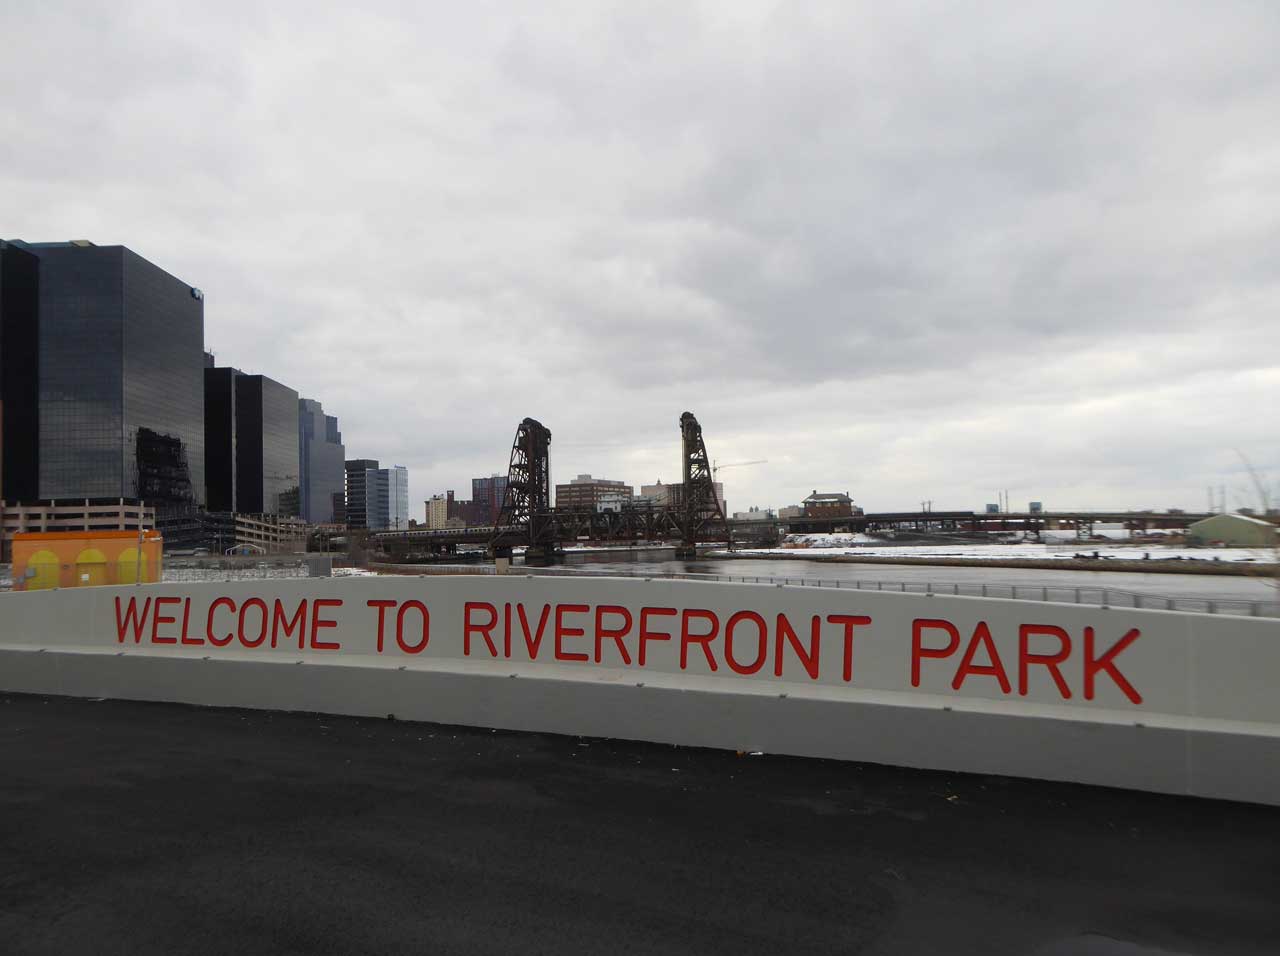 Riverfront Park Newark 5